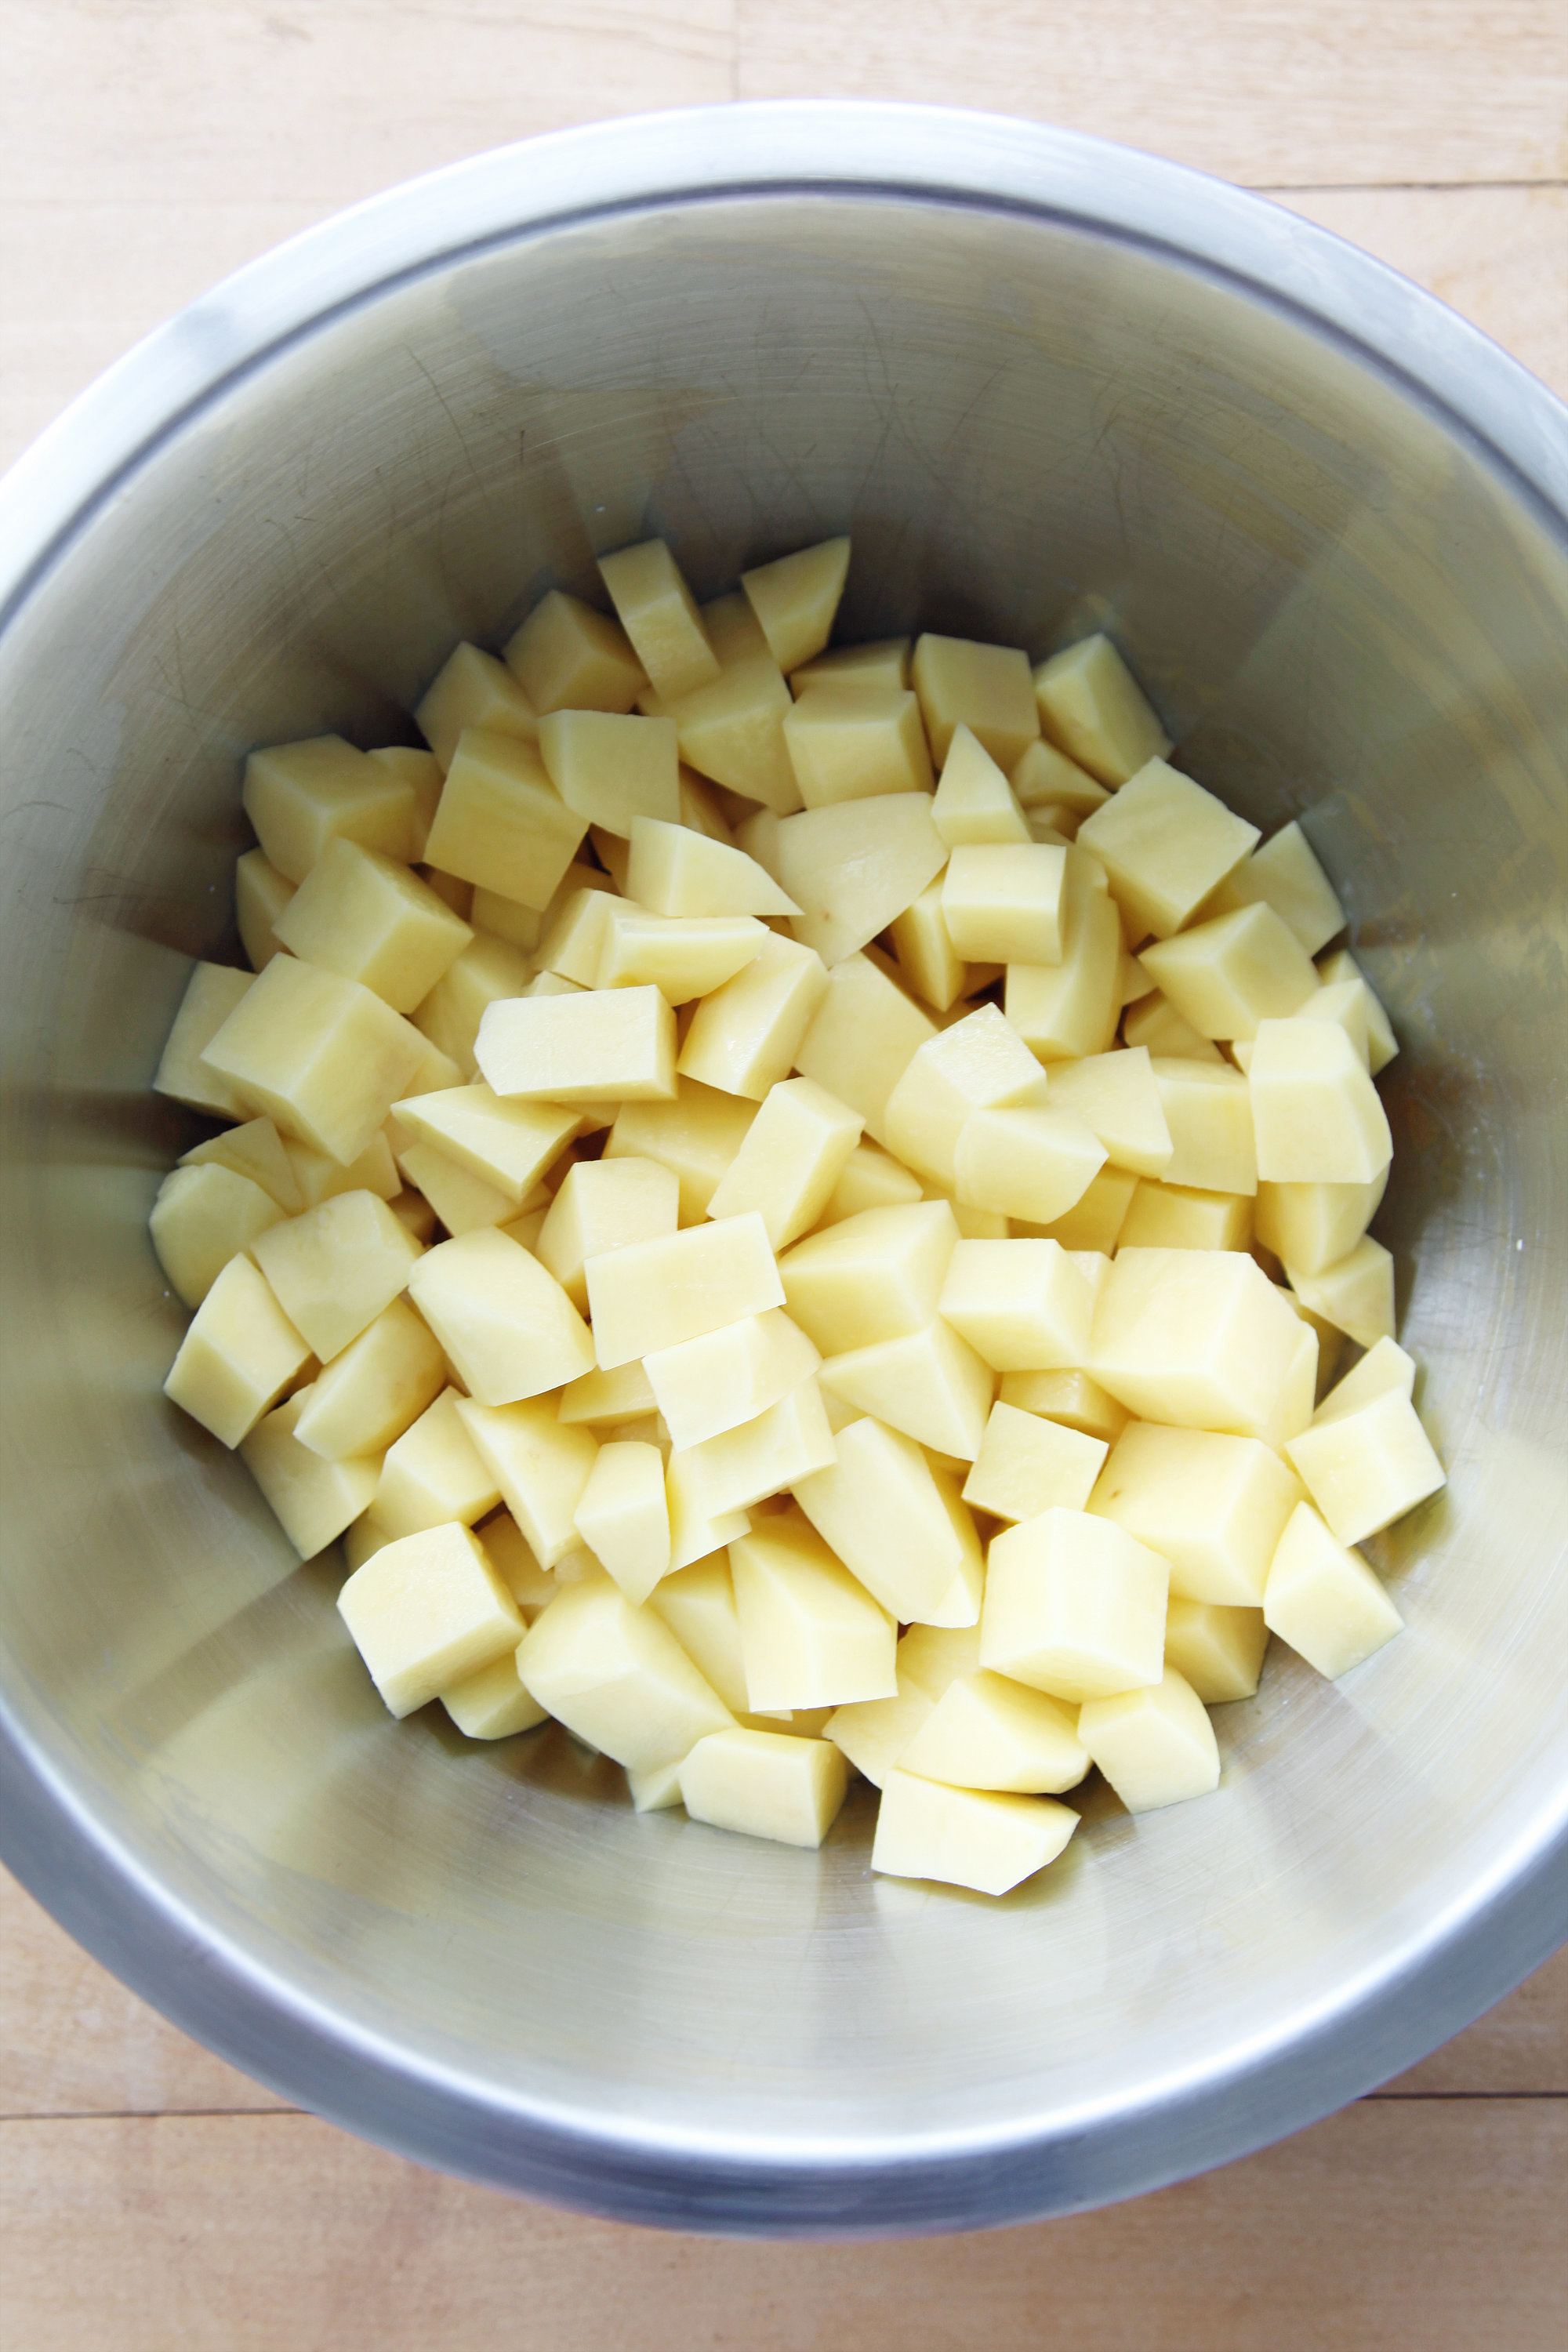 Ina Garten's mashed potatoes recipe for Thanksgiving: chopping the potatoes